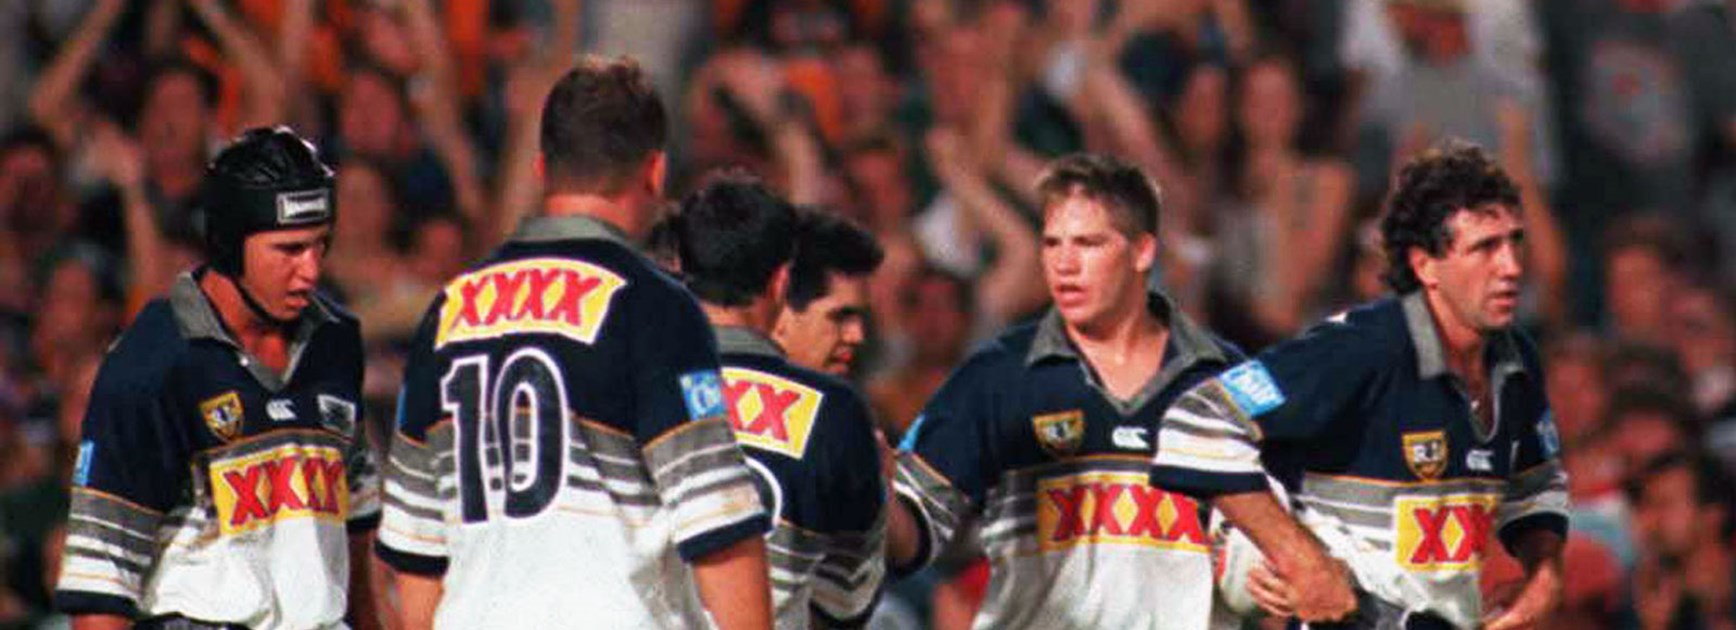 cowboys 1995 jersey